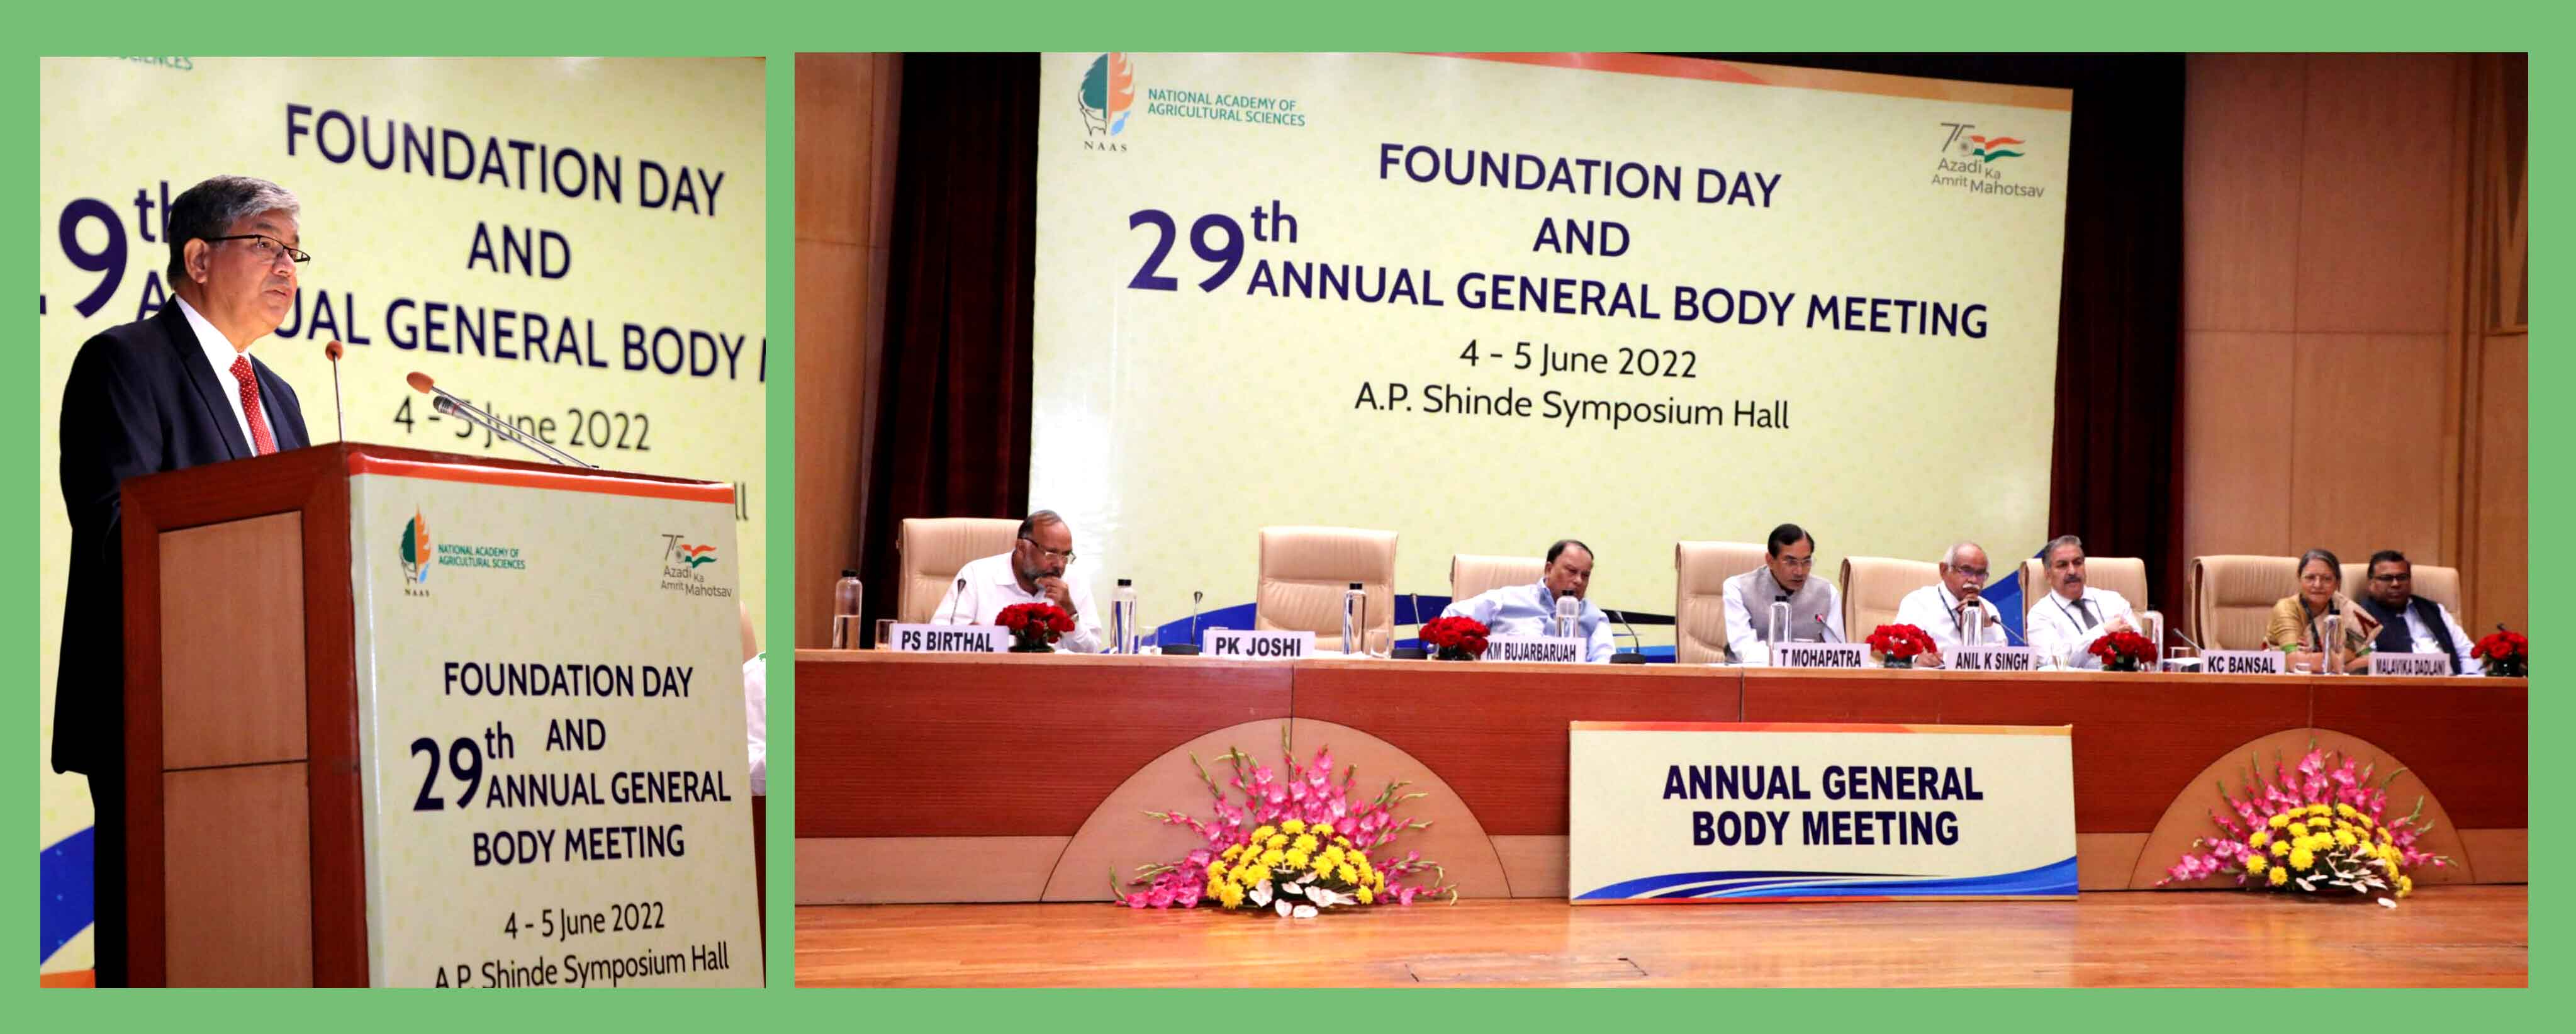 Dr. P.K. Joshi presenting Secretary's Report at 29th Annual General Body meeting